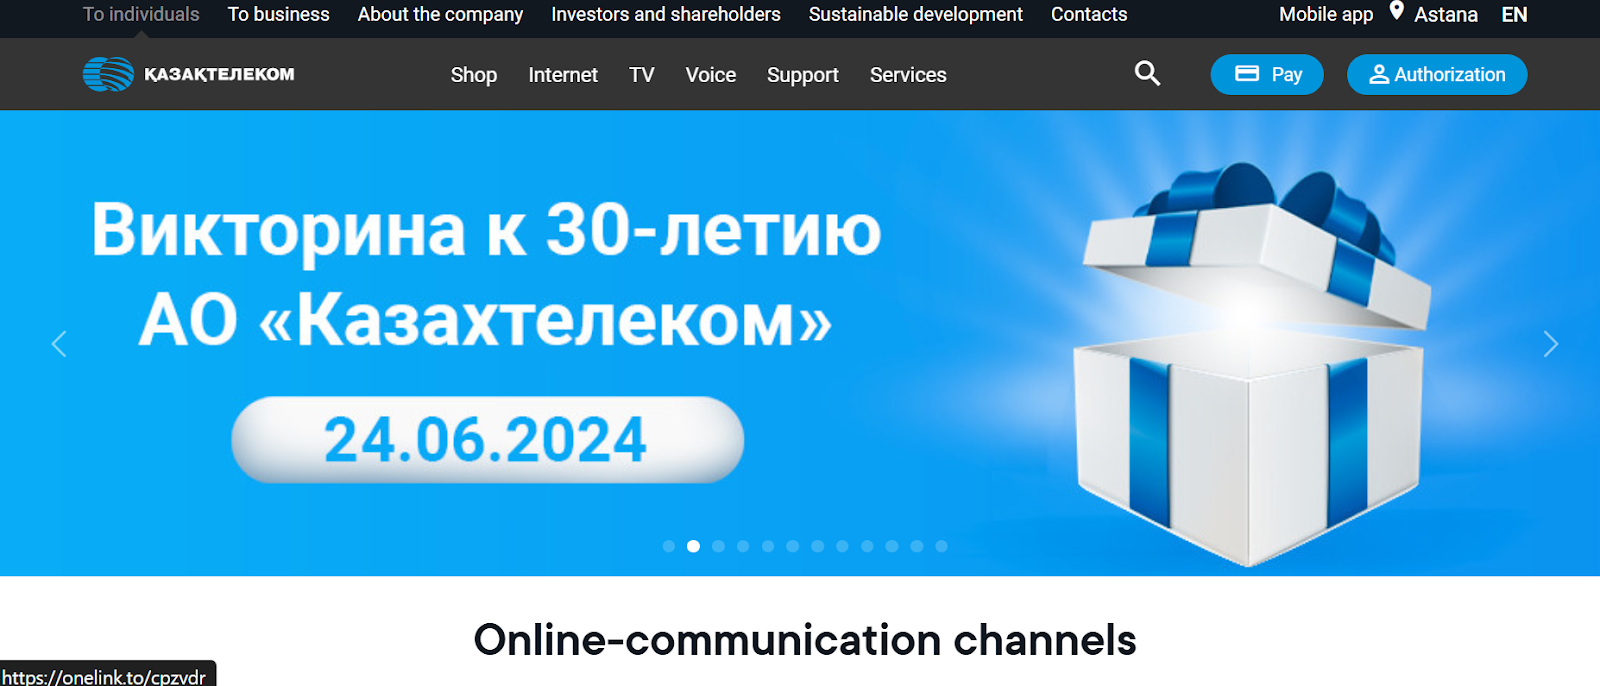 Kazakhtelecom website snapshot highlighting the services it offers.